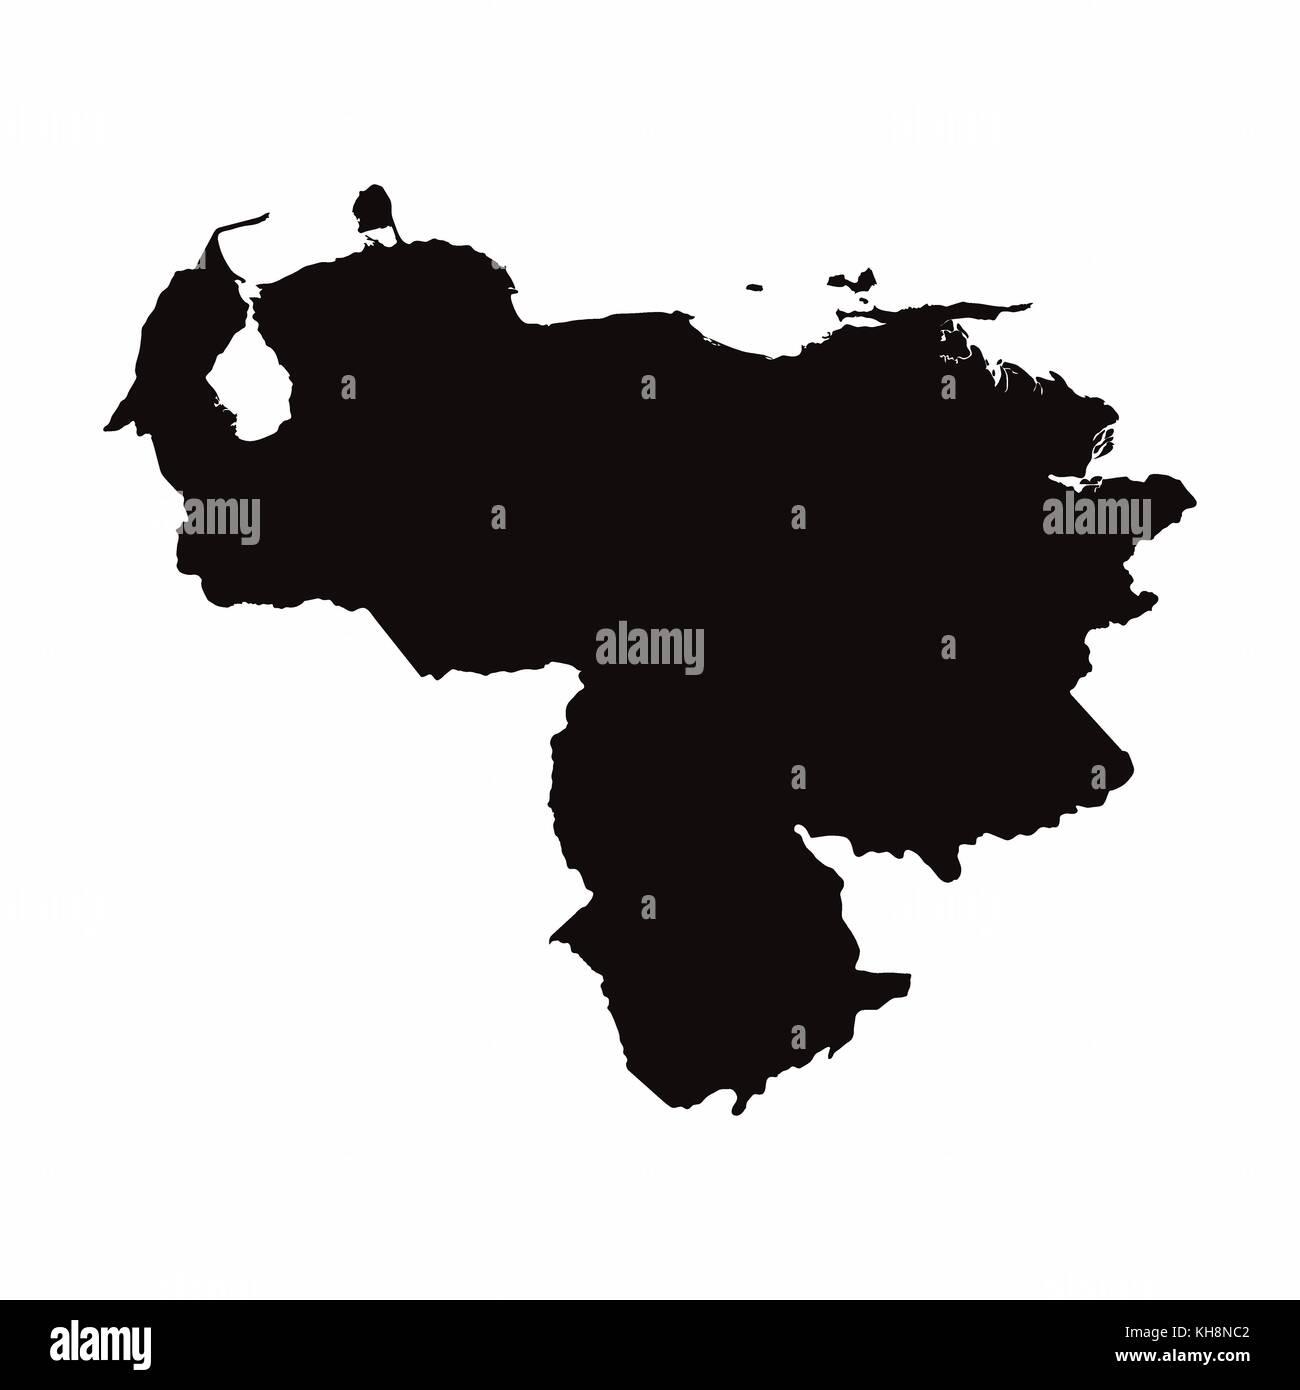 Venezuela vector country map Stock Vector